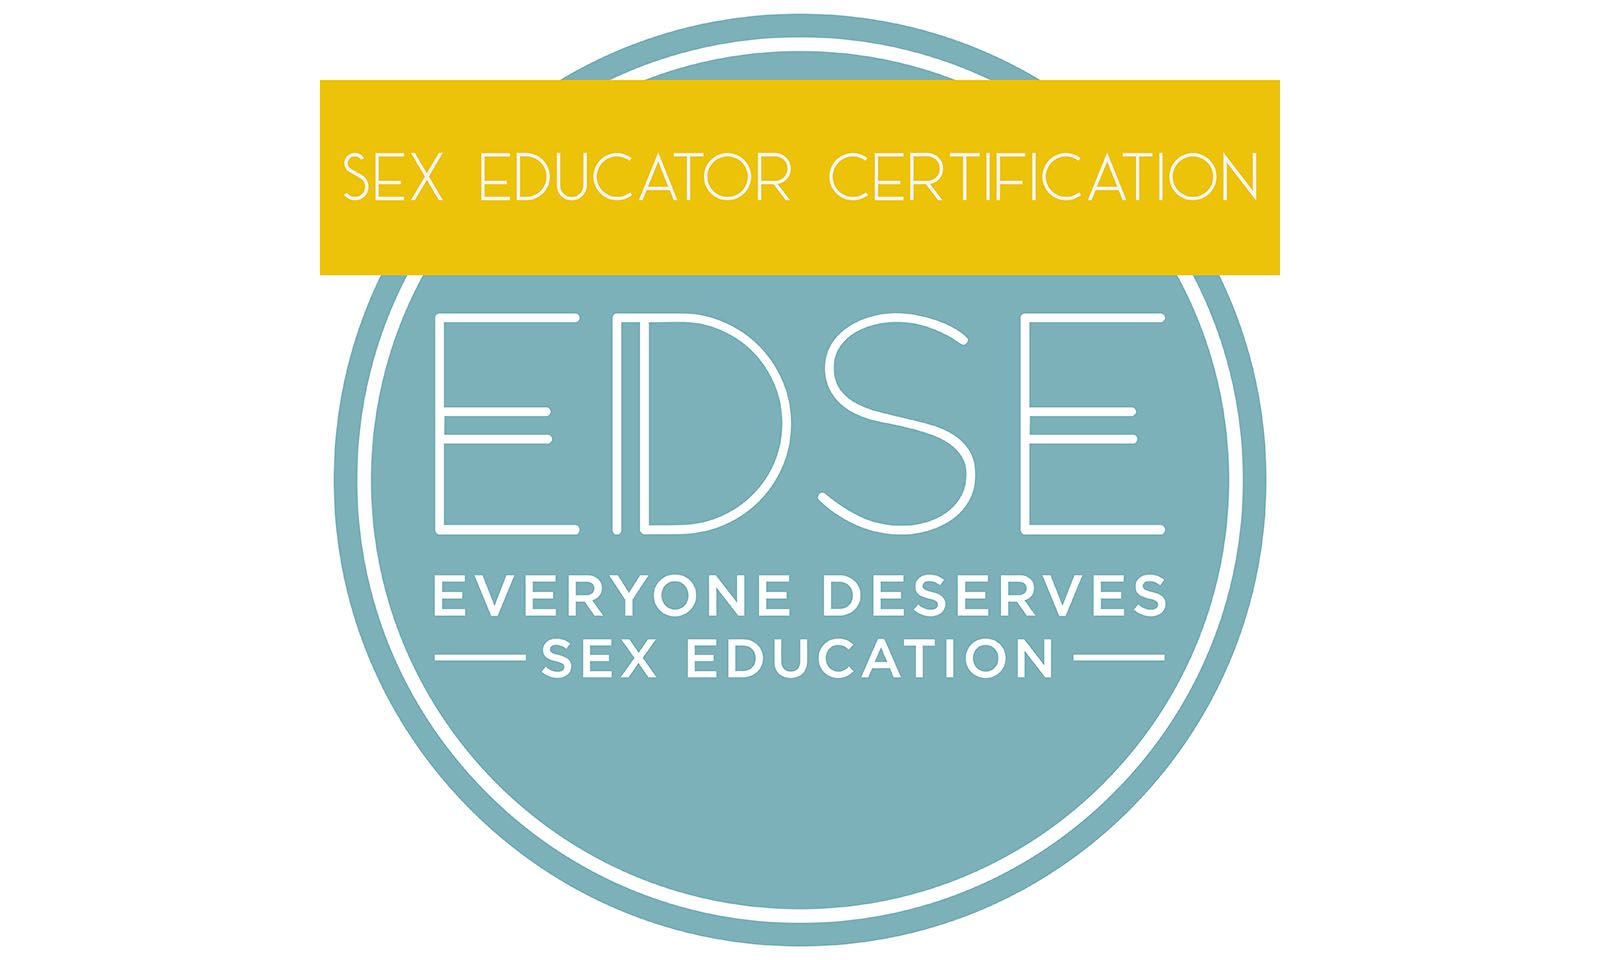 Next EDSE Sex Educator Certification Course Is Mid-April In LA